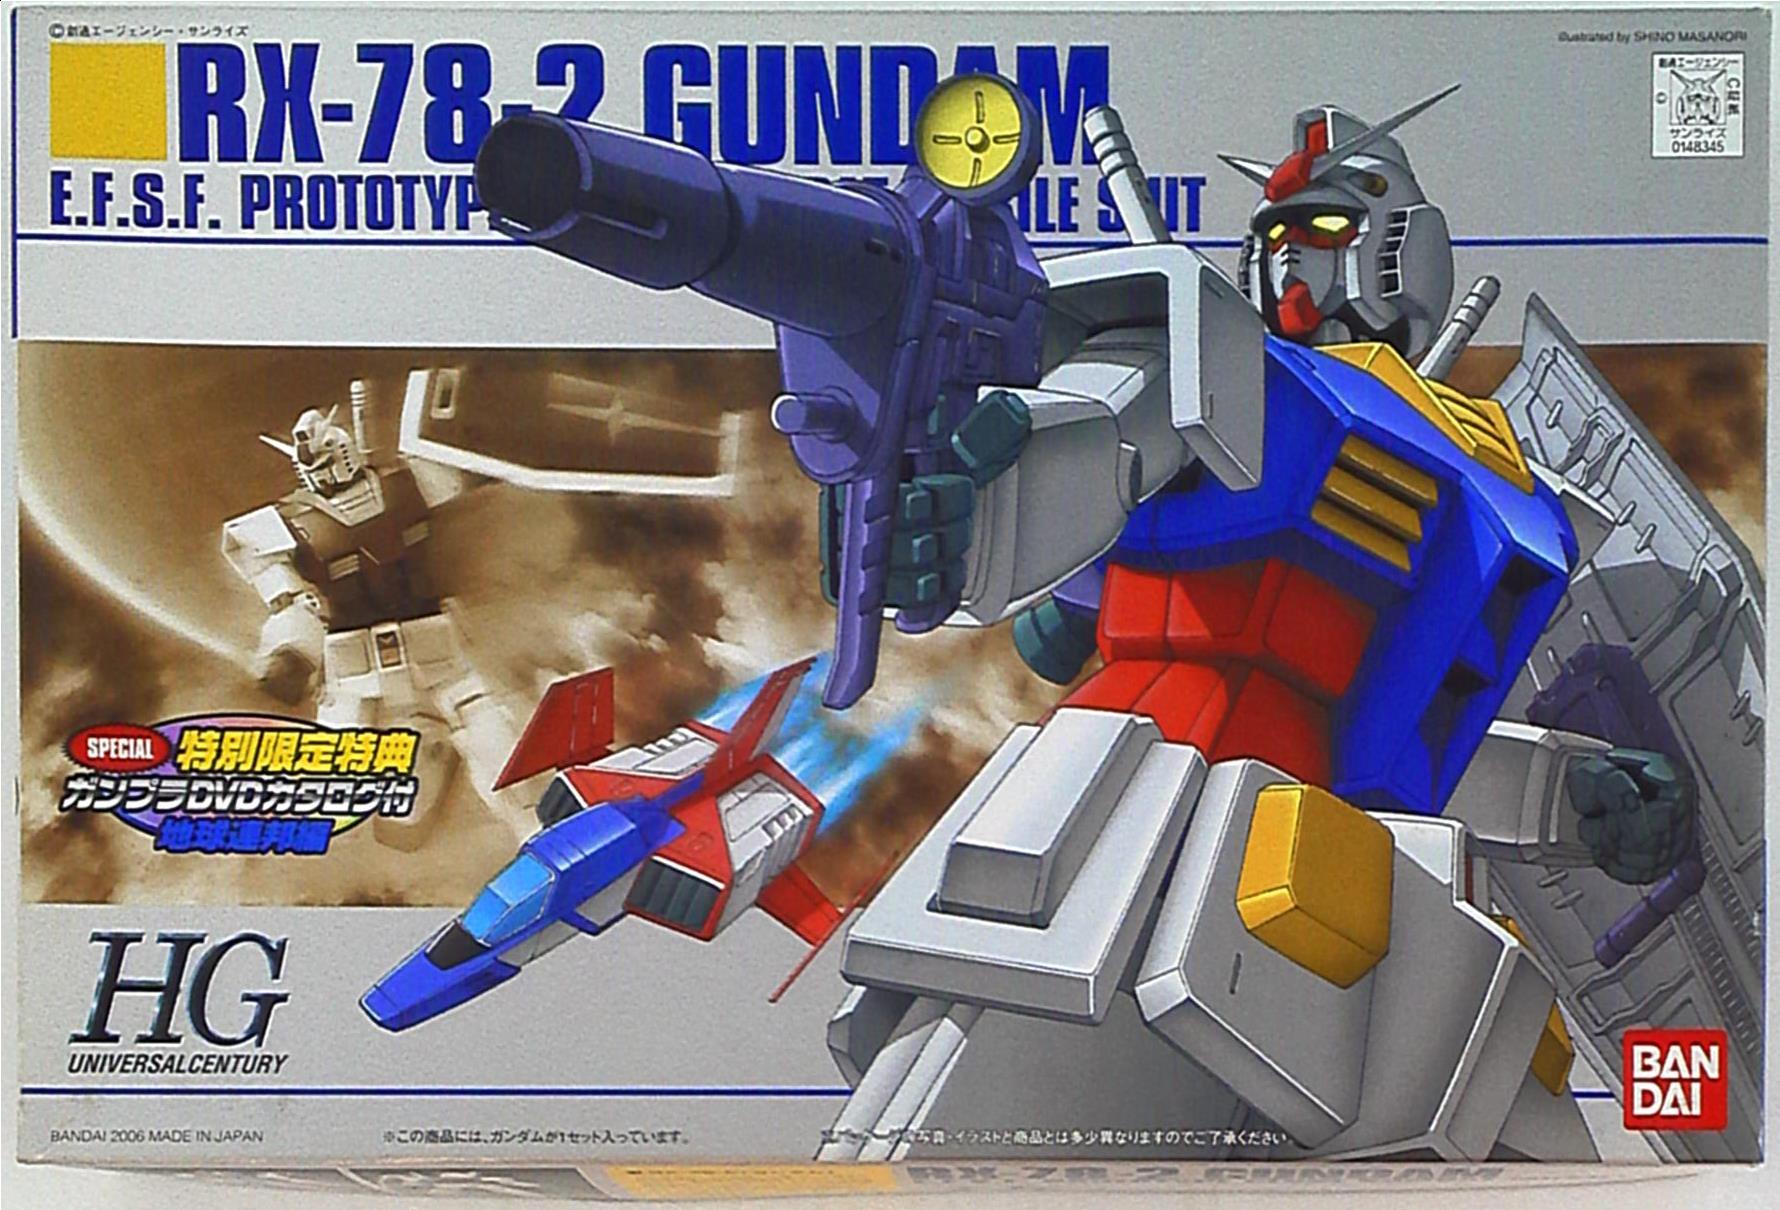 Bandai Hguc Rx 78 2 Gundam Special Limited Bonus Item Gunpla Dvd With Catalog Mandarake Online Shop